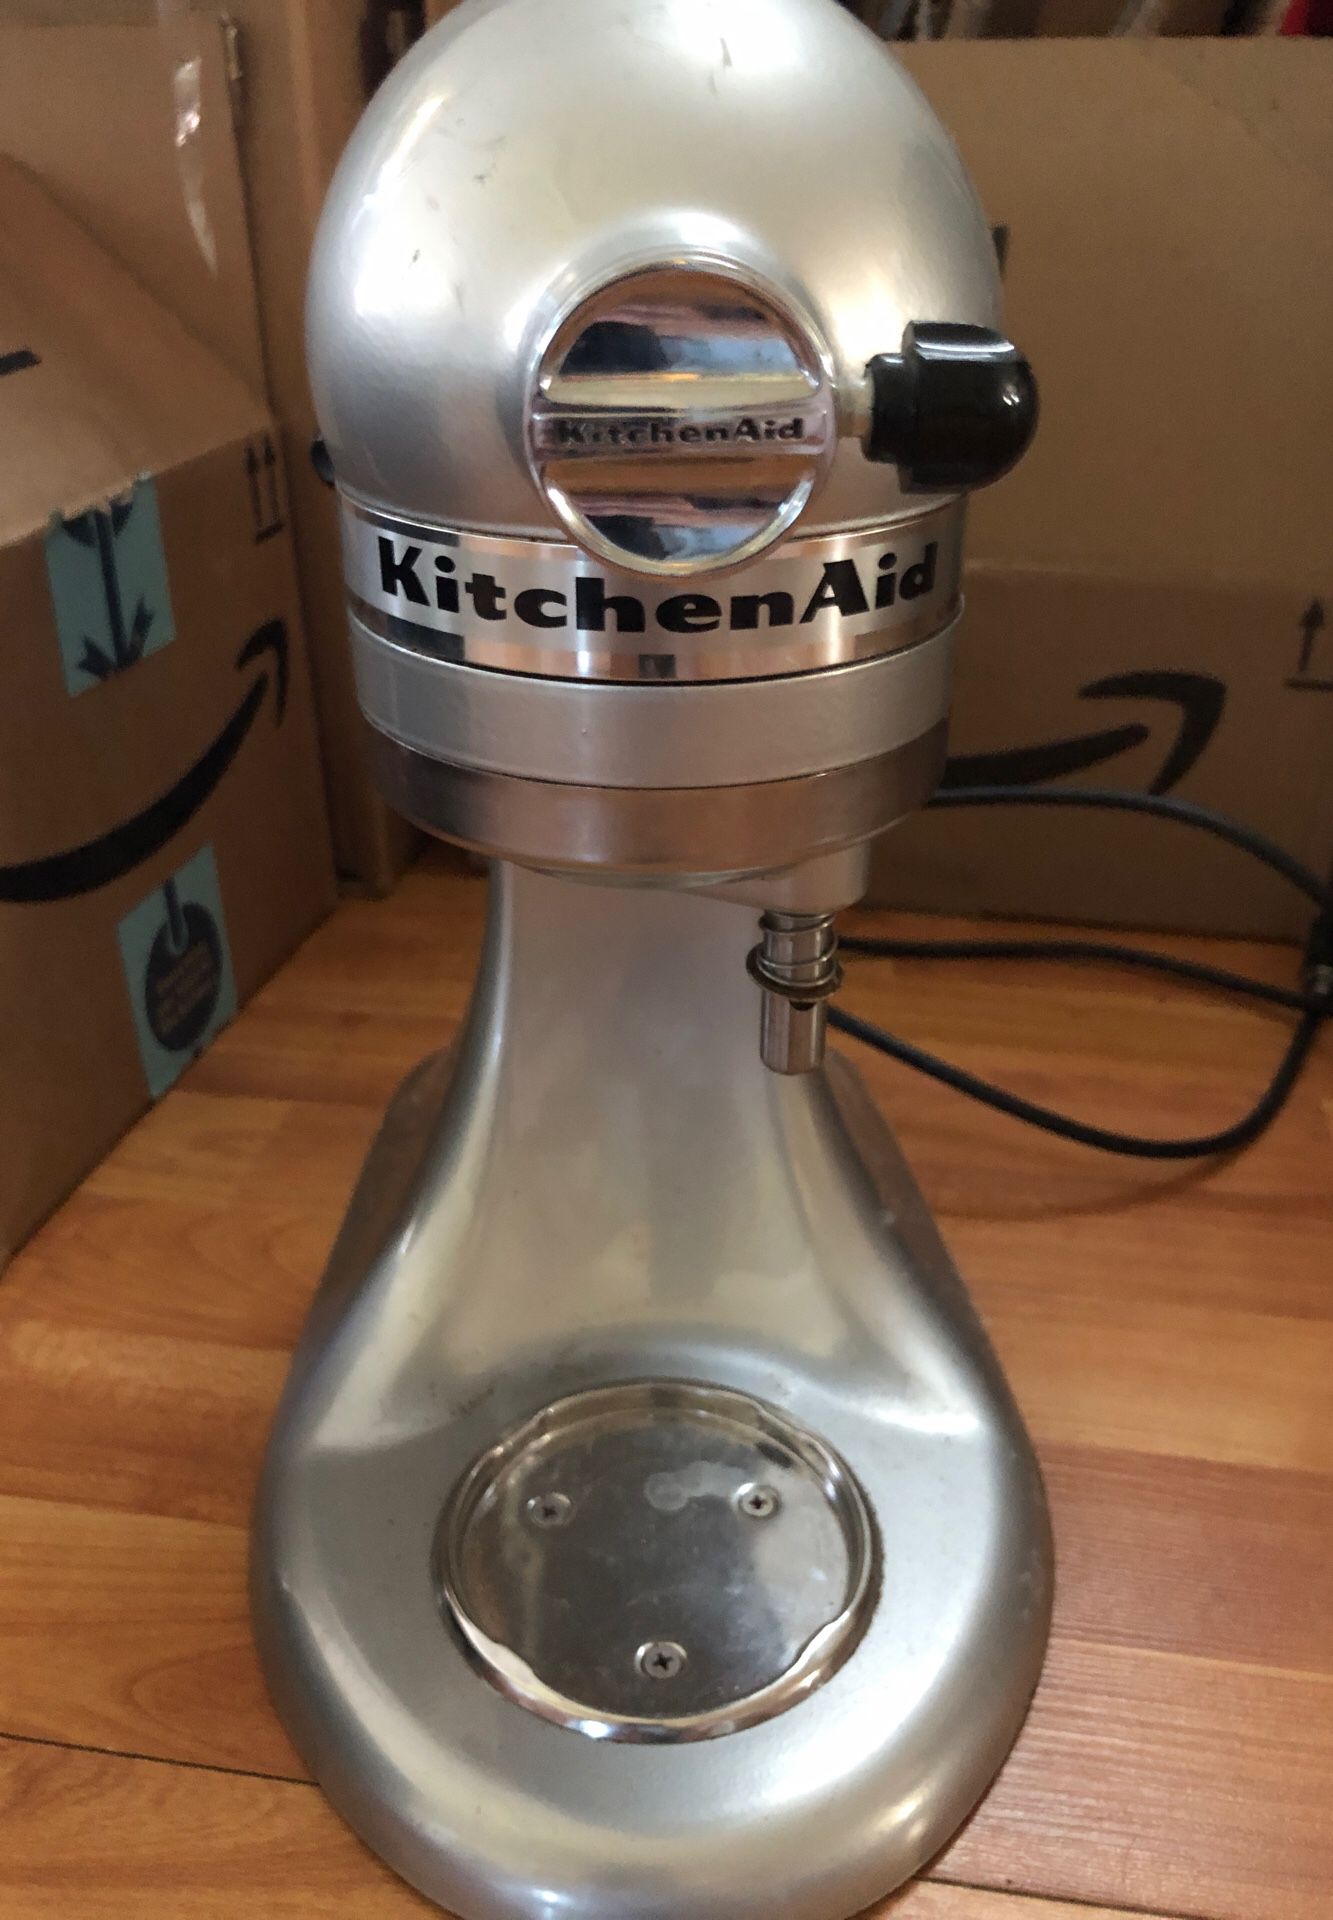 KitchenAid mixer. Broken